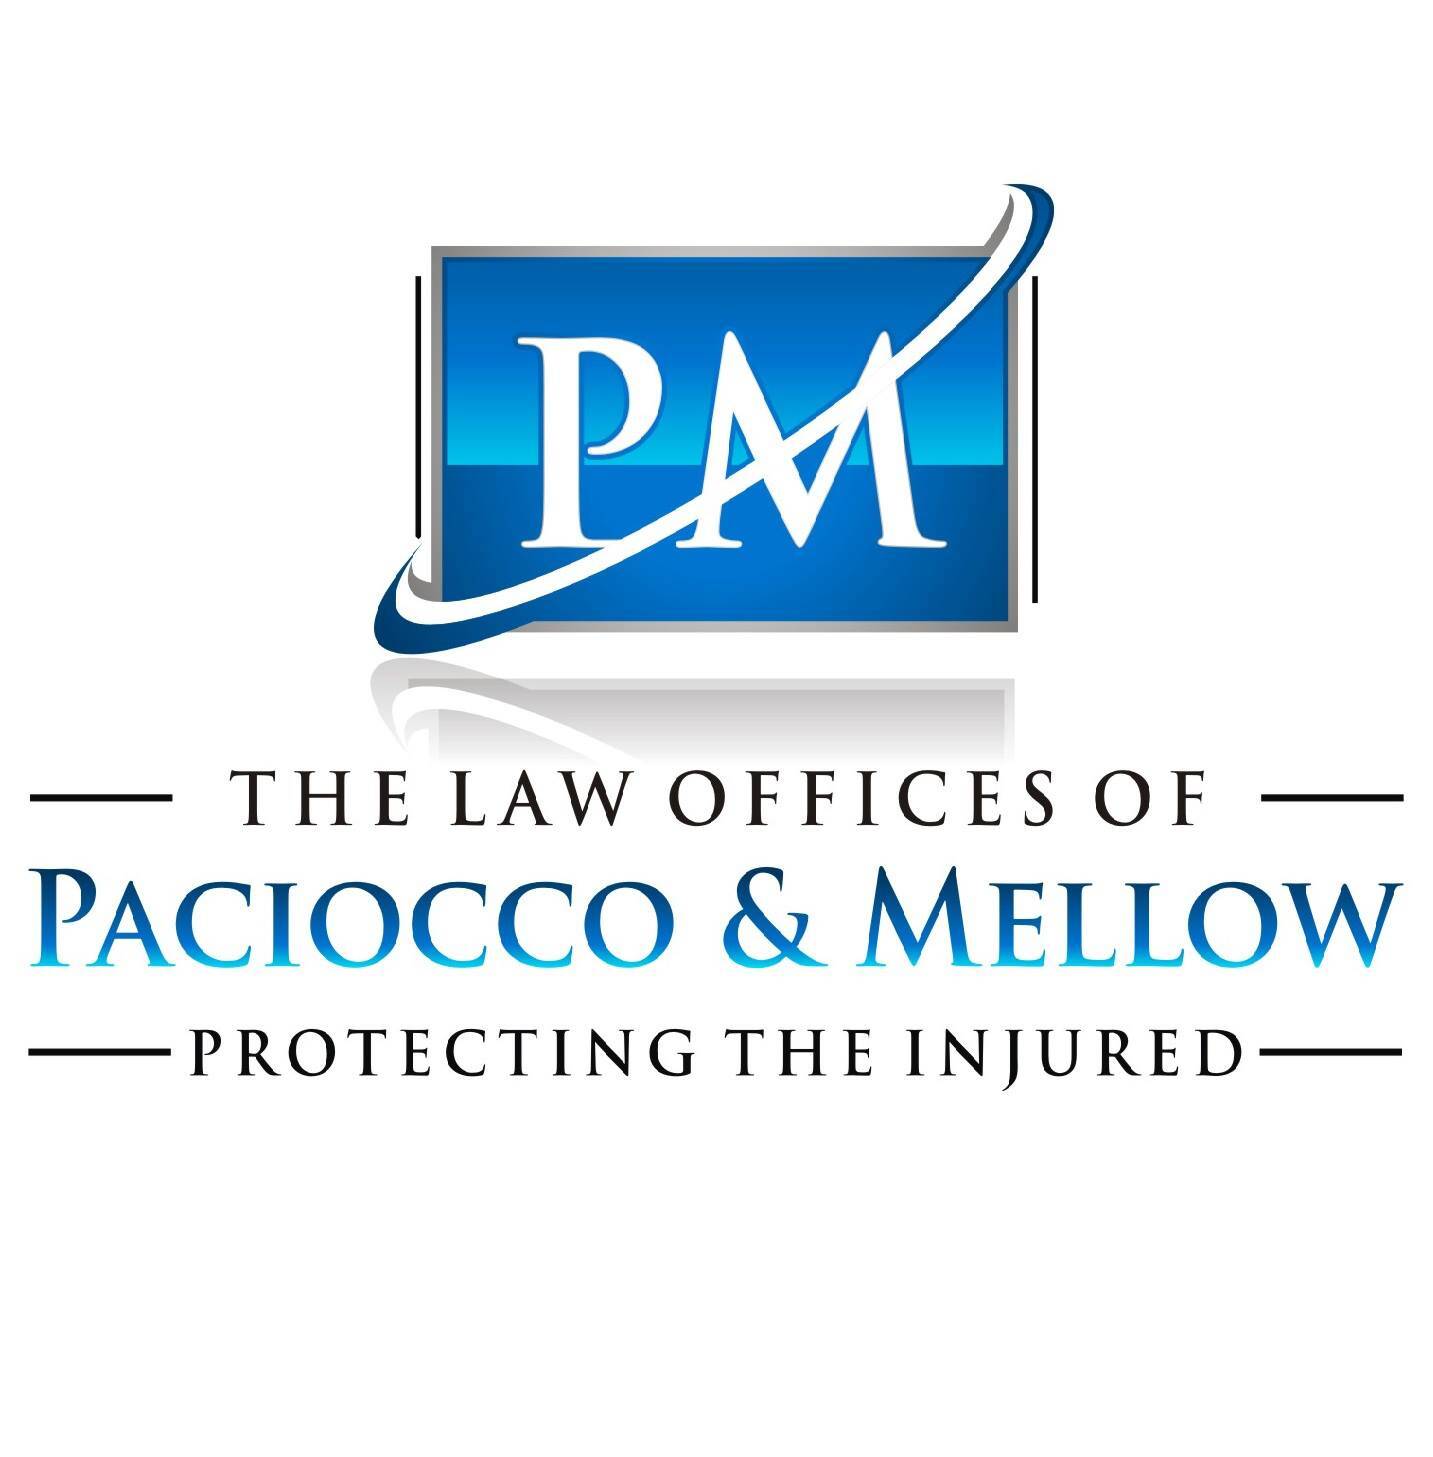 Paciocco & Mellow Injury Lawyers